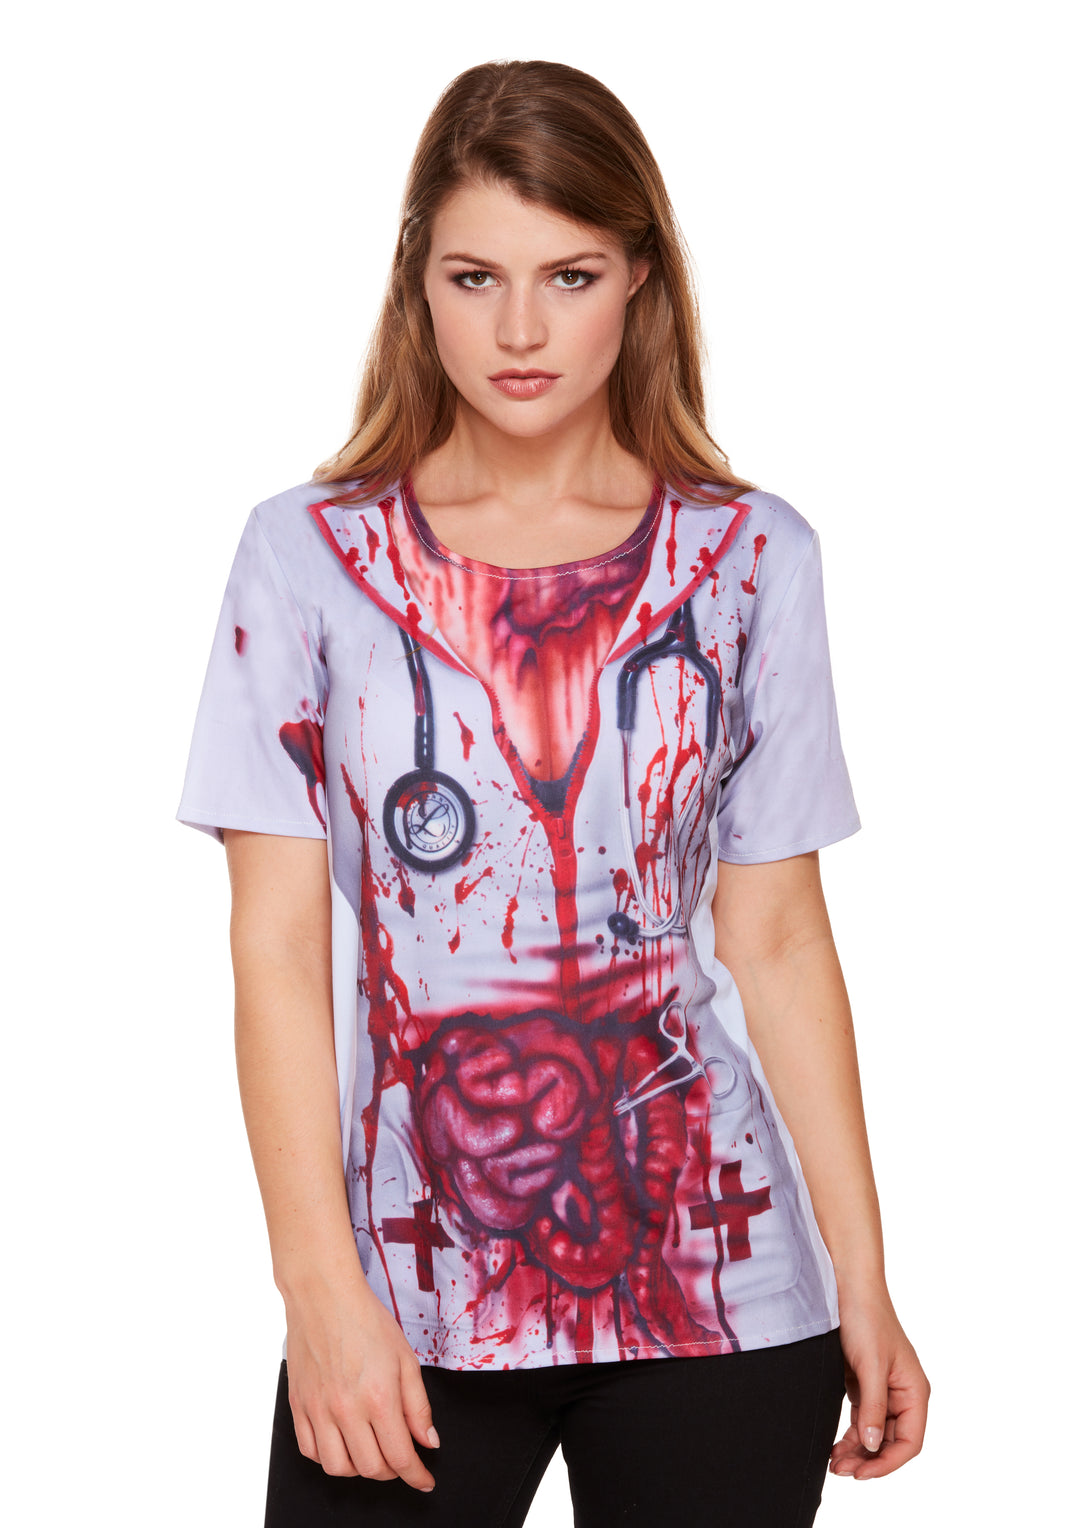 Bloody Nurse Shirt for Ladies Halloween Costume